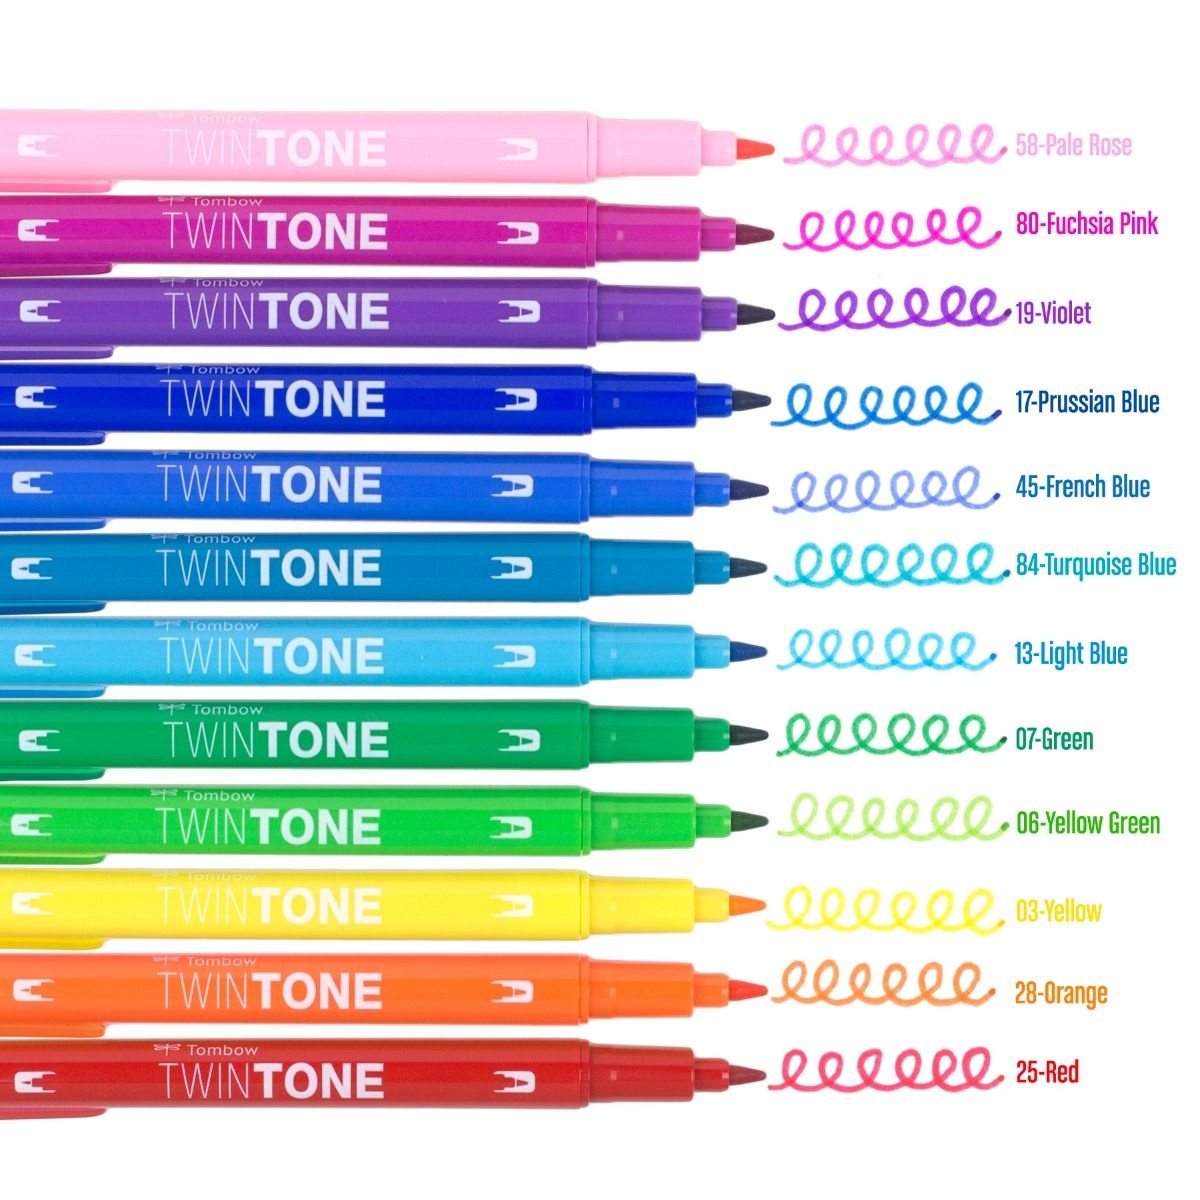 TwinTone Marker Rainbow 12er-Set in der Gruppe Stifte / Künstlerstifte / Illustrationsmarker bei Pen Store (101130)